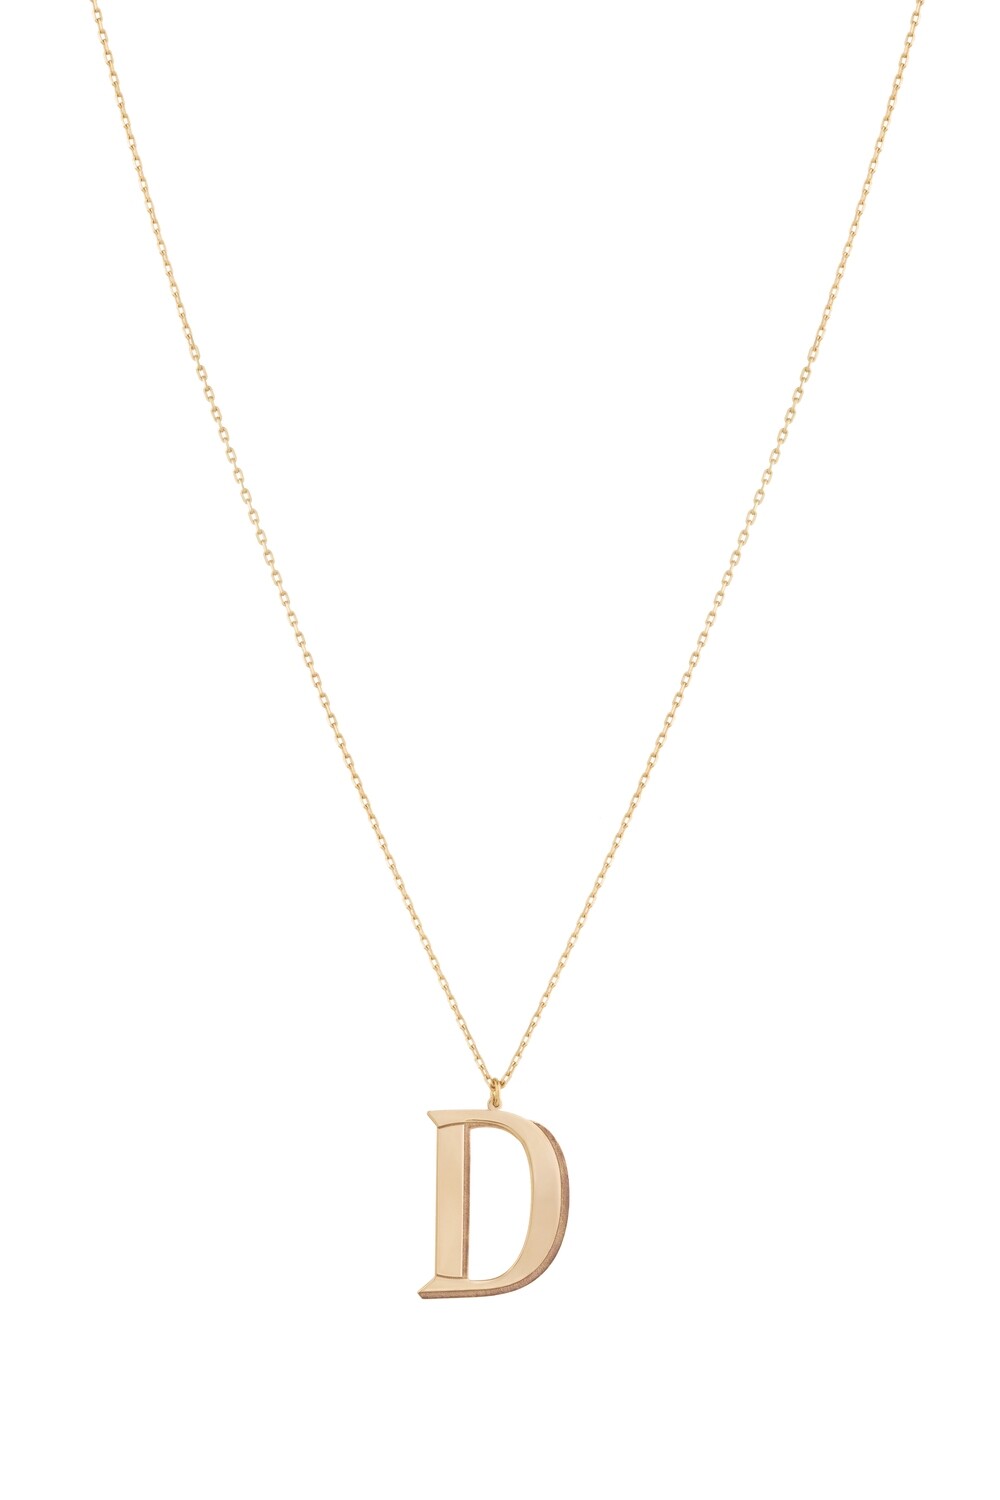 Initials Gold Necklace Letter D